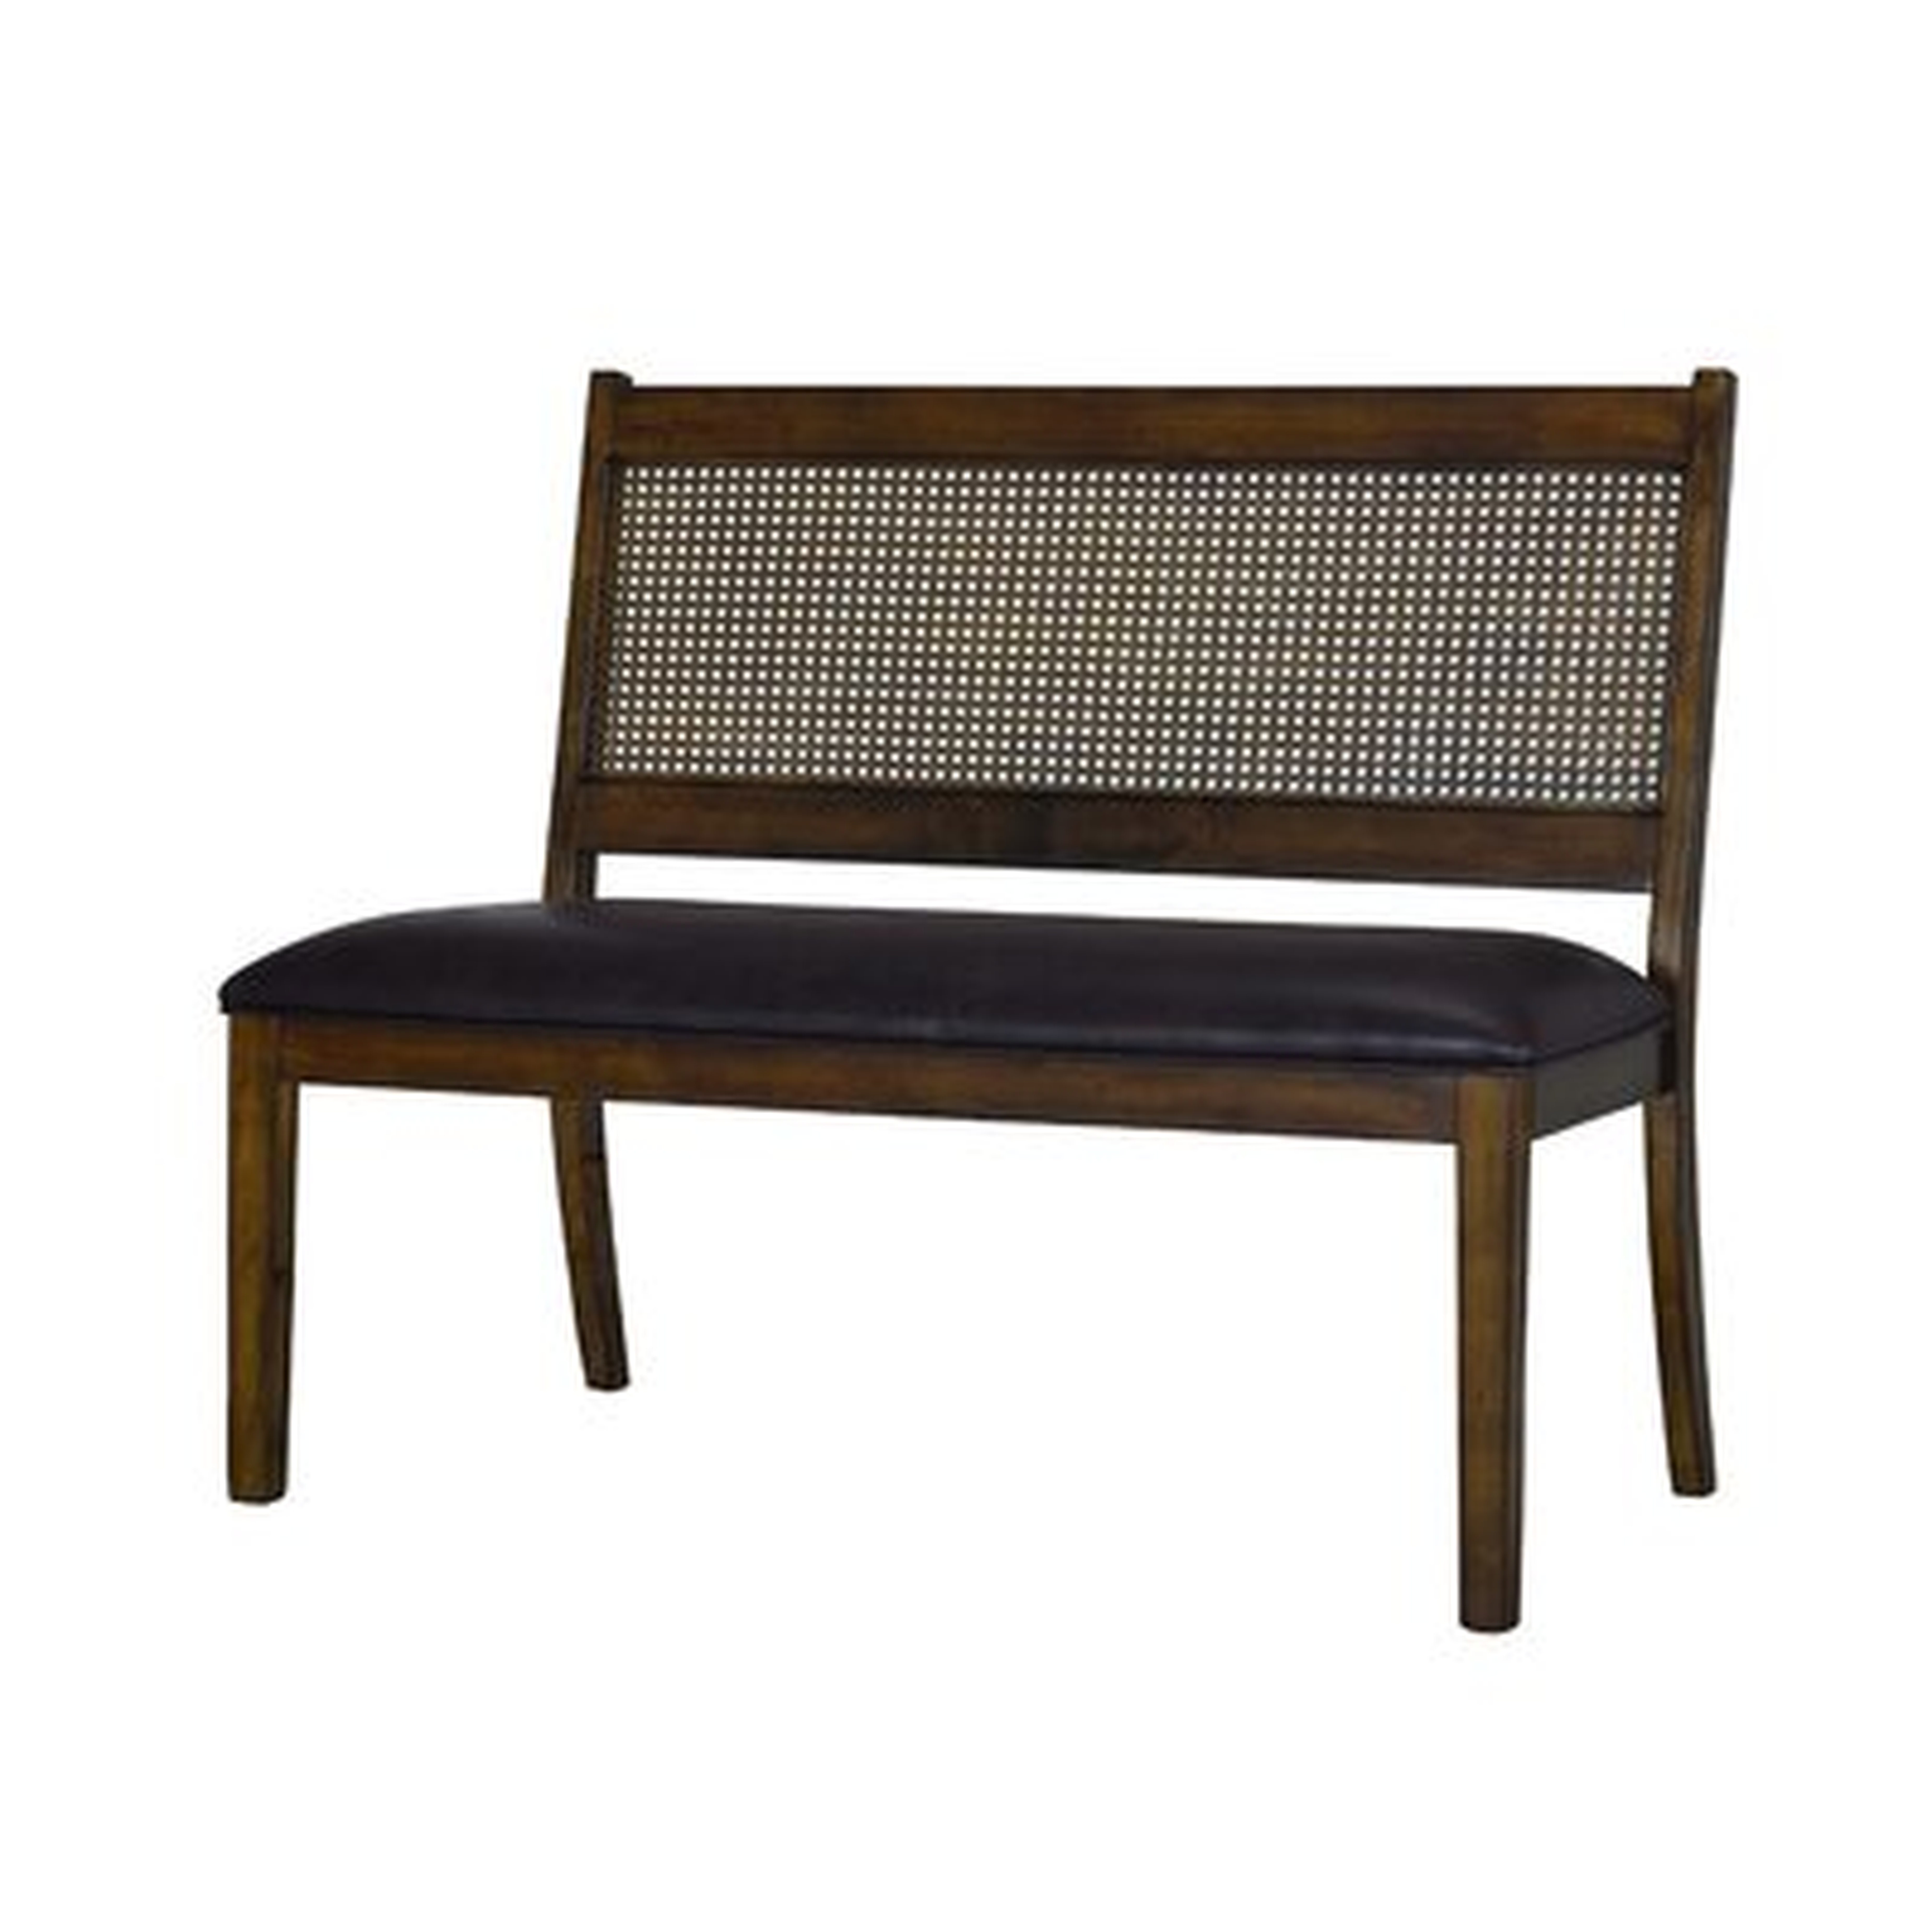 Upholstered Bench - Wayfair